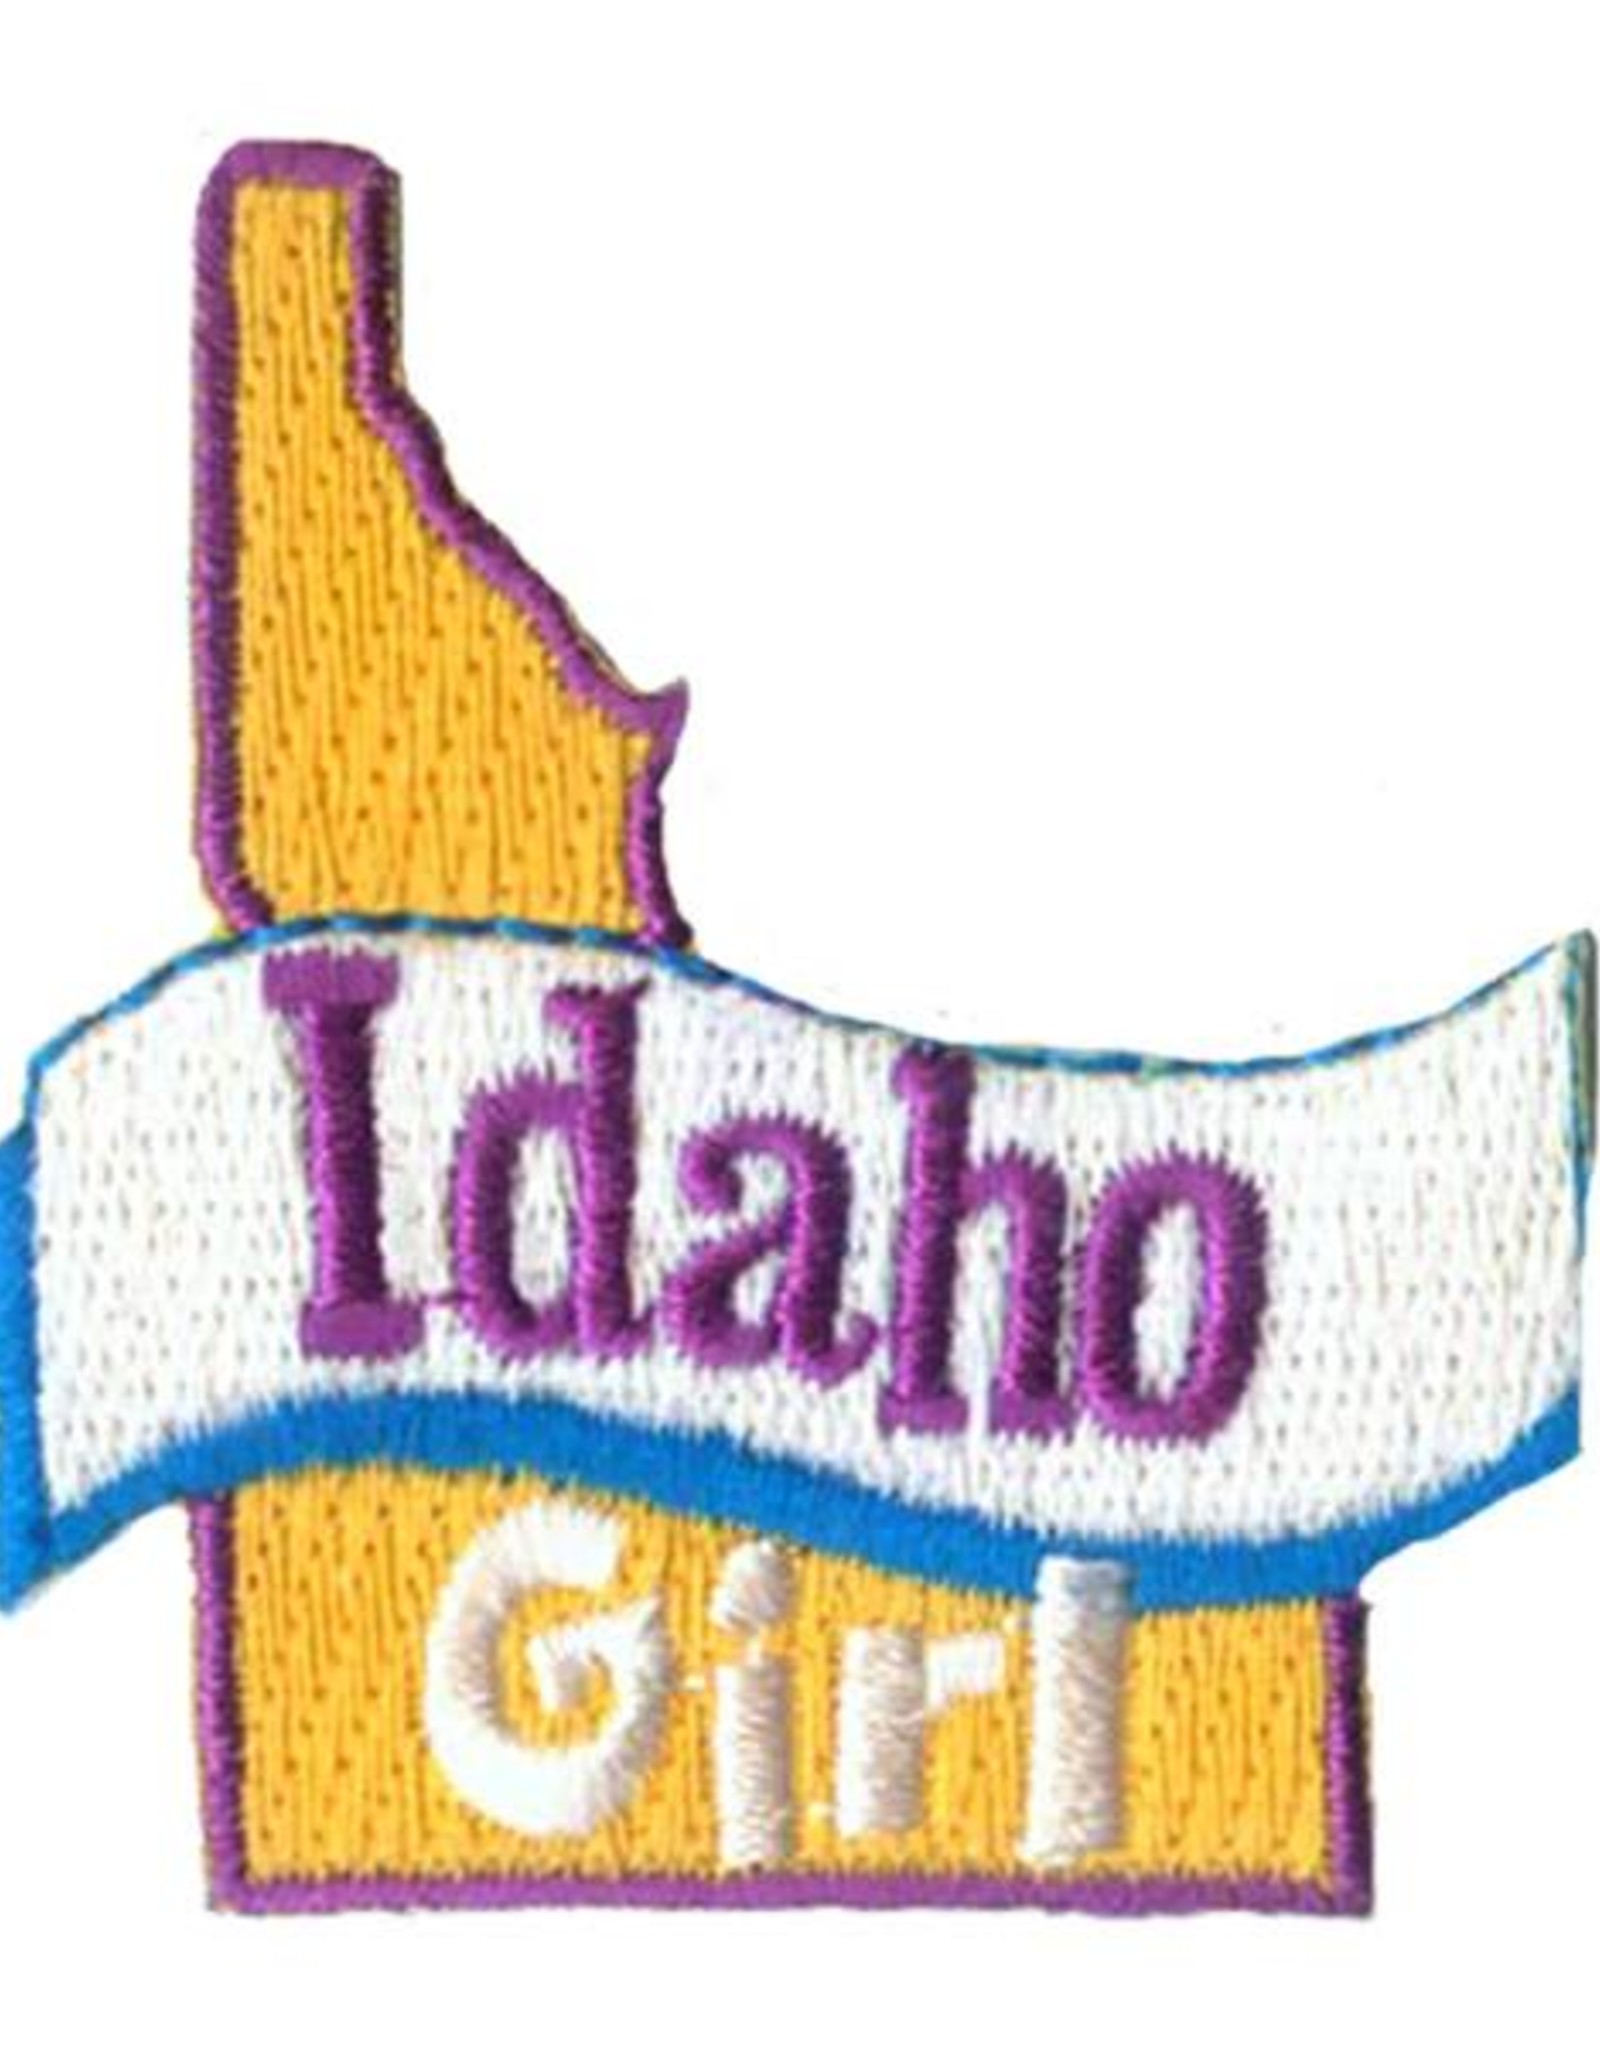 Advantage Emblem & Screen Prnt *Idaho Girl Fun Patch